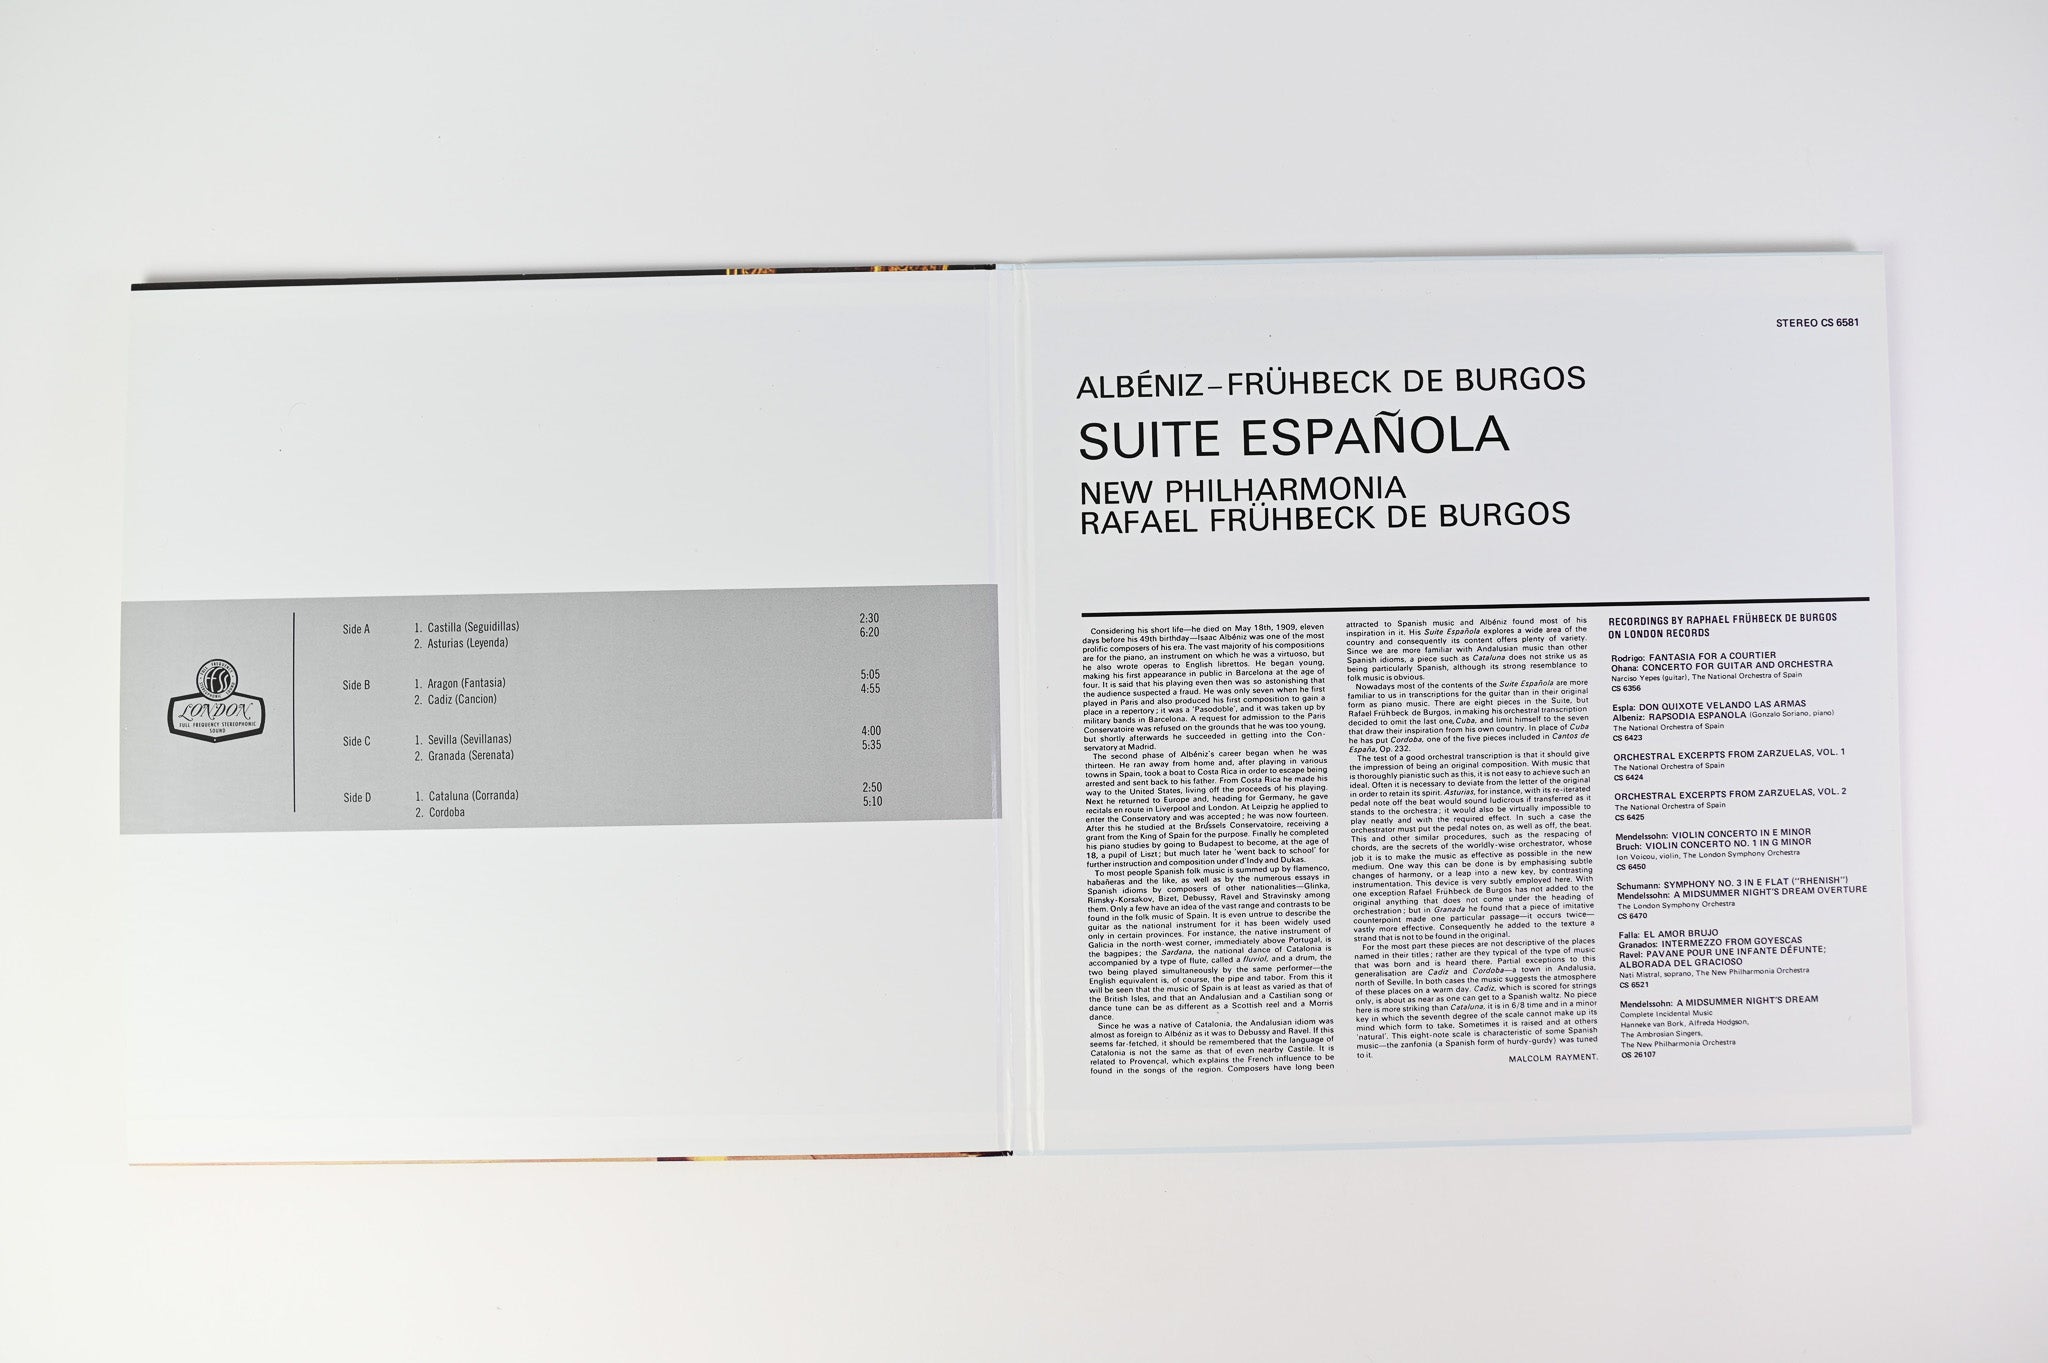 Isaac Albéniz - Suite Española on London ORG 180 Gram Limited Numbered Reissue